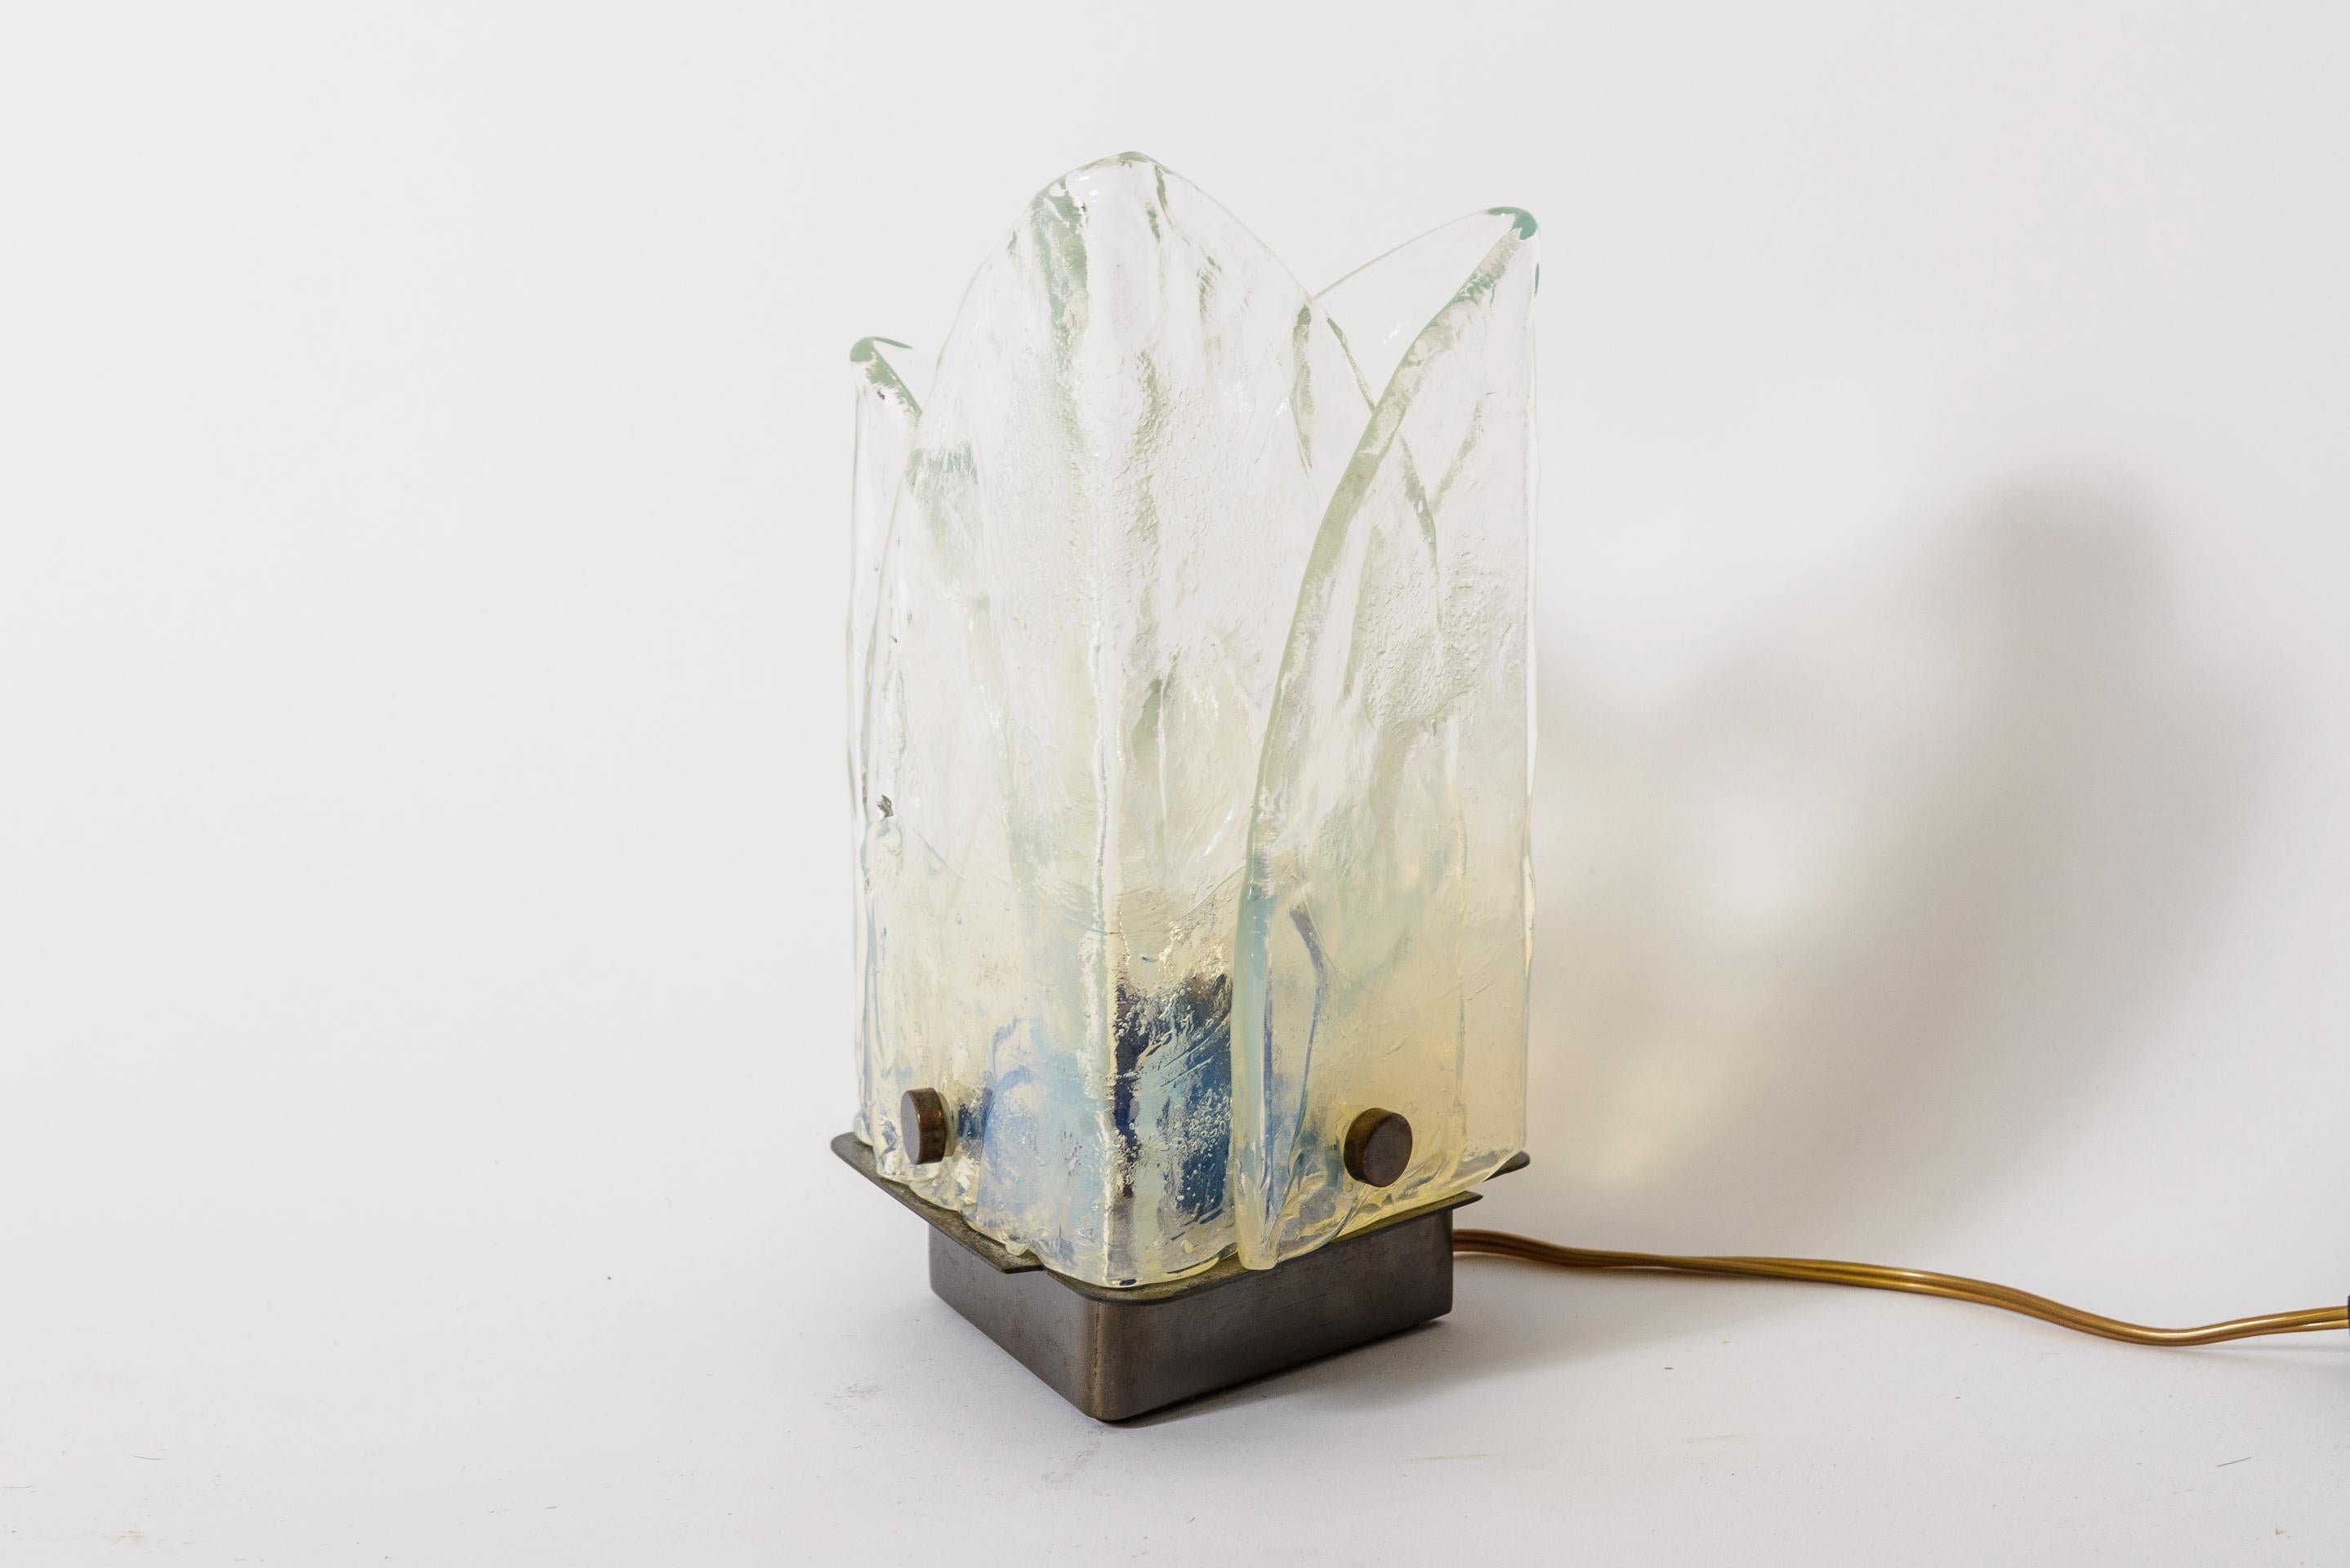 AV Mezzaga Diminutive Table Lamp.
Opalescent Glass over a nickel-Plated base
